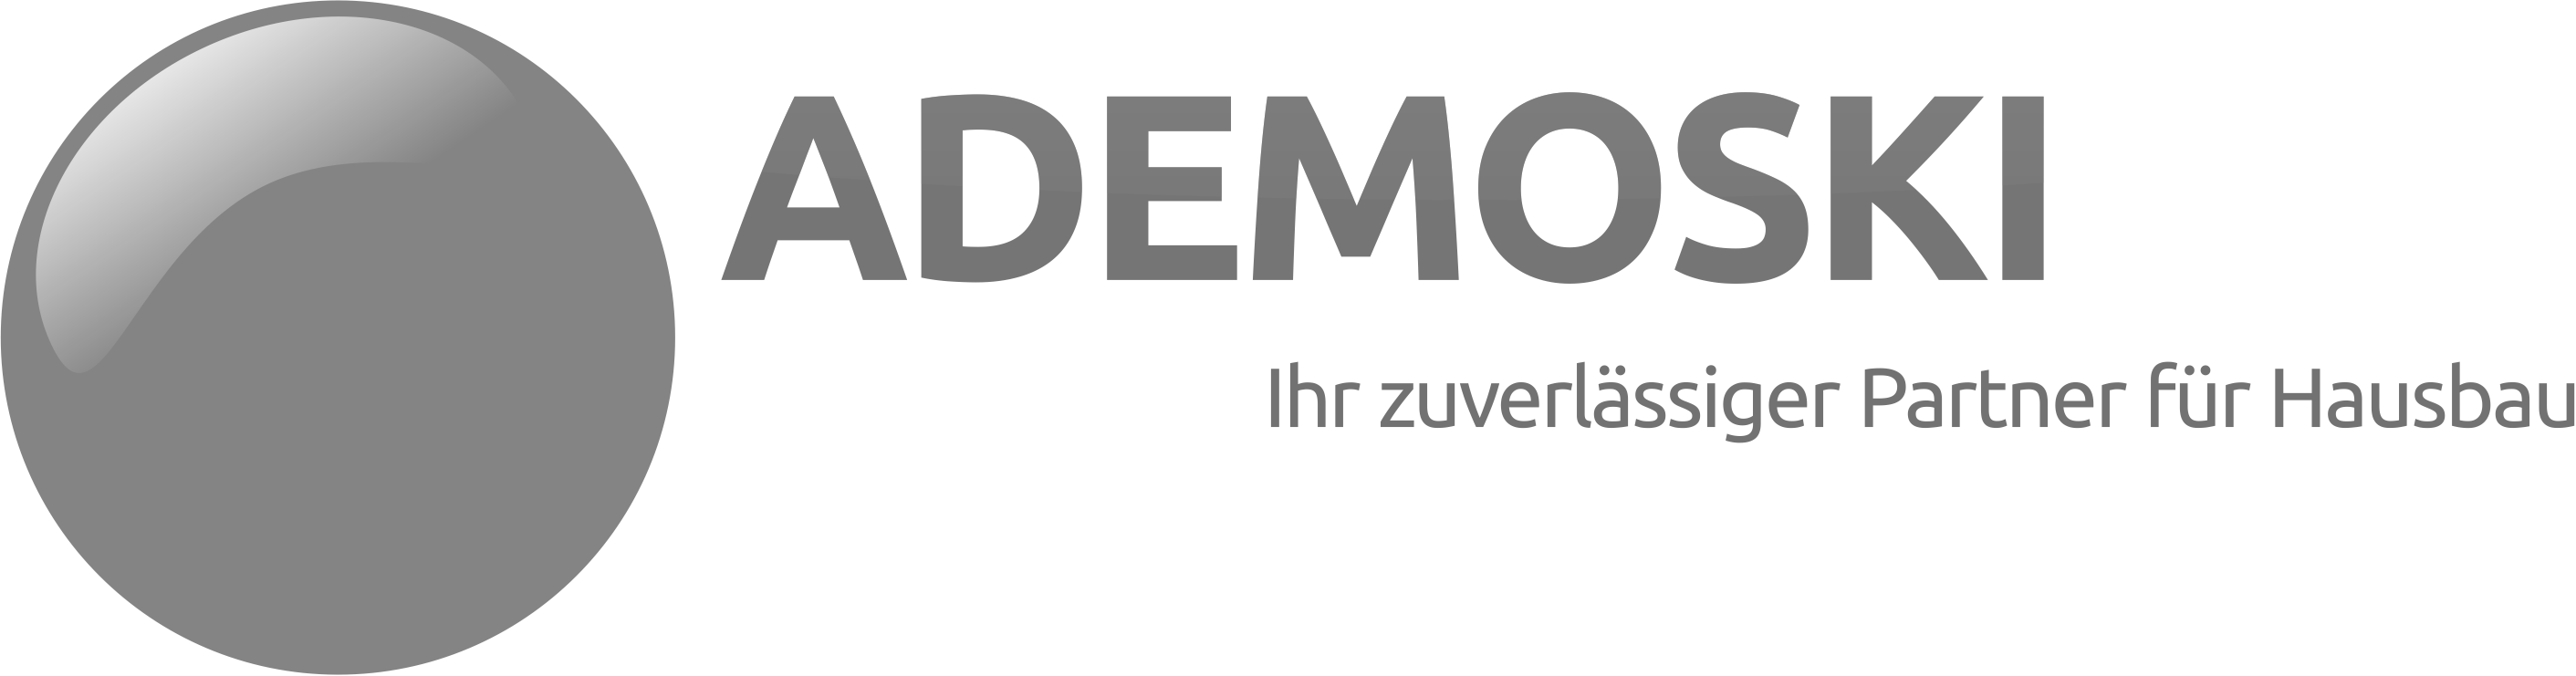 client logo ademoski